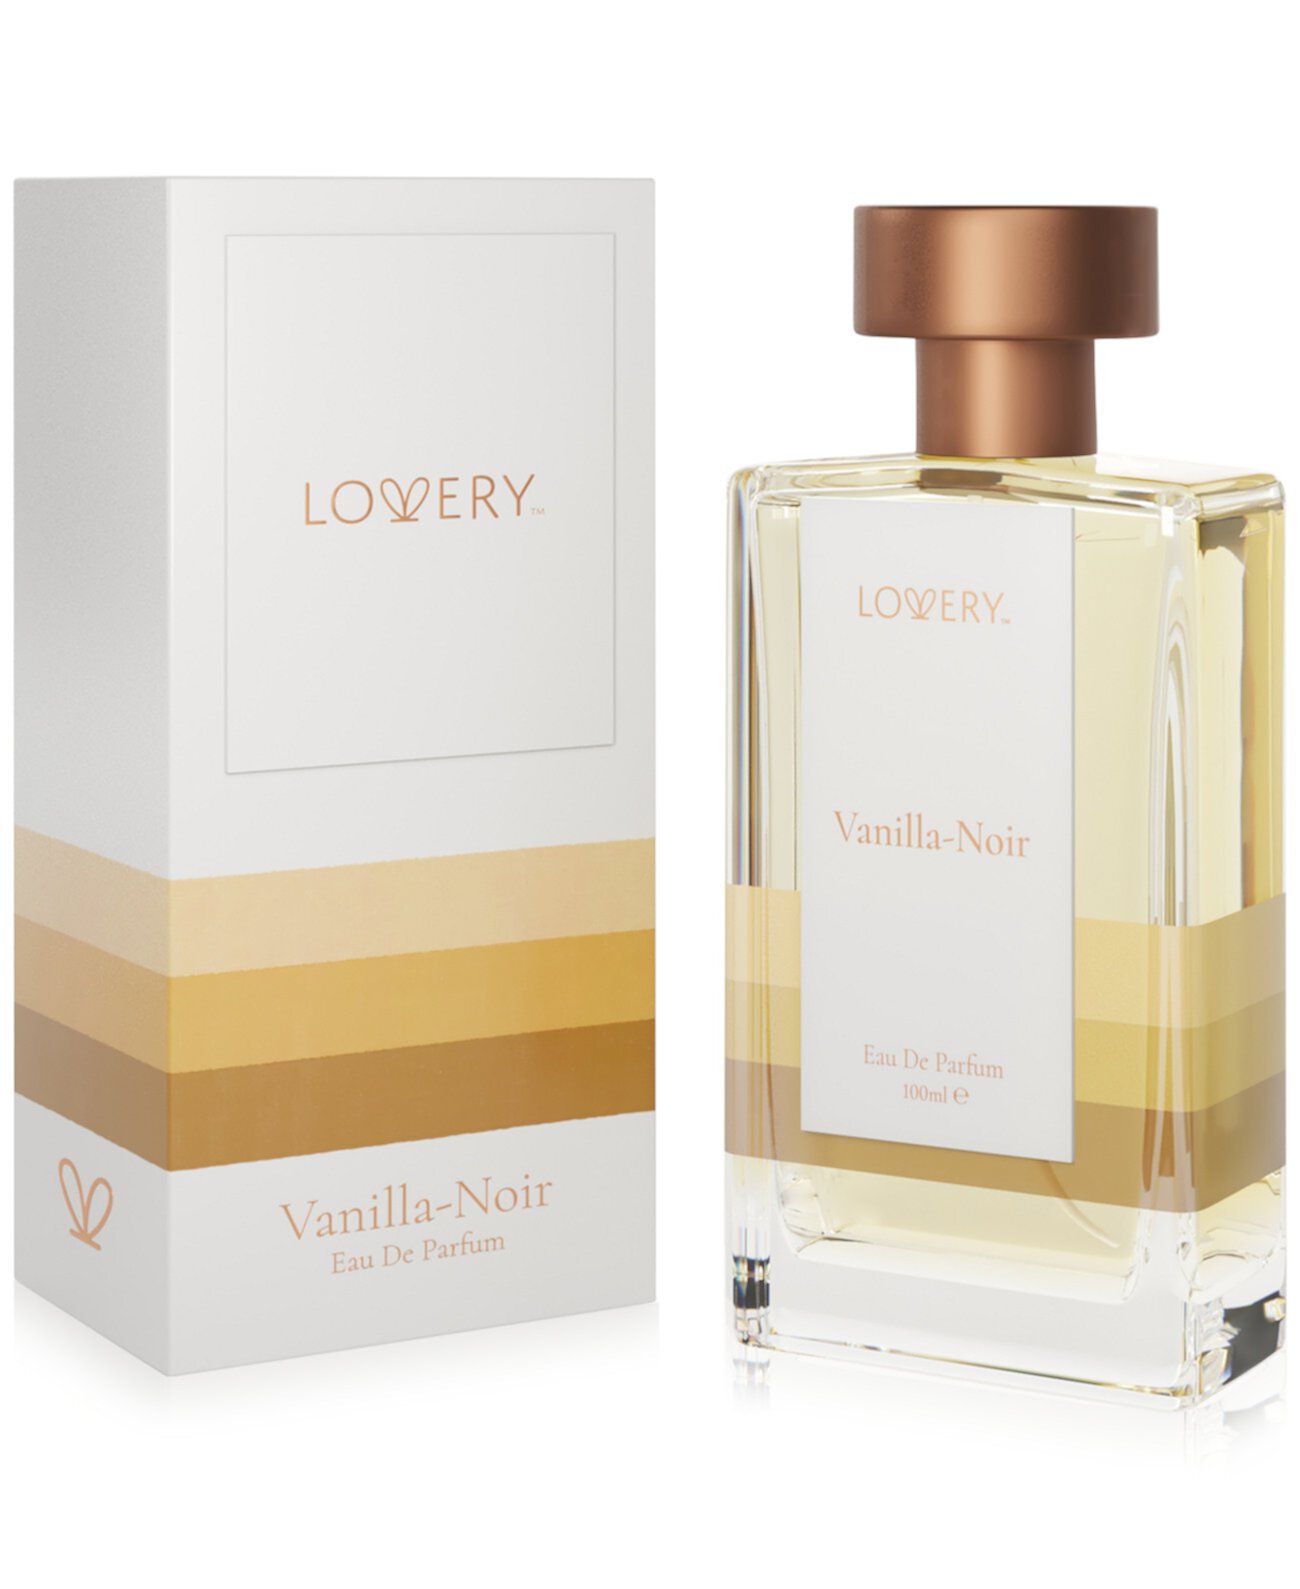 Vanilla-Noir Eau de Parfum, 3.4 oz. Lovery